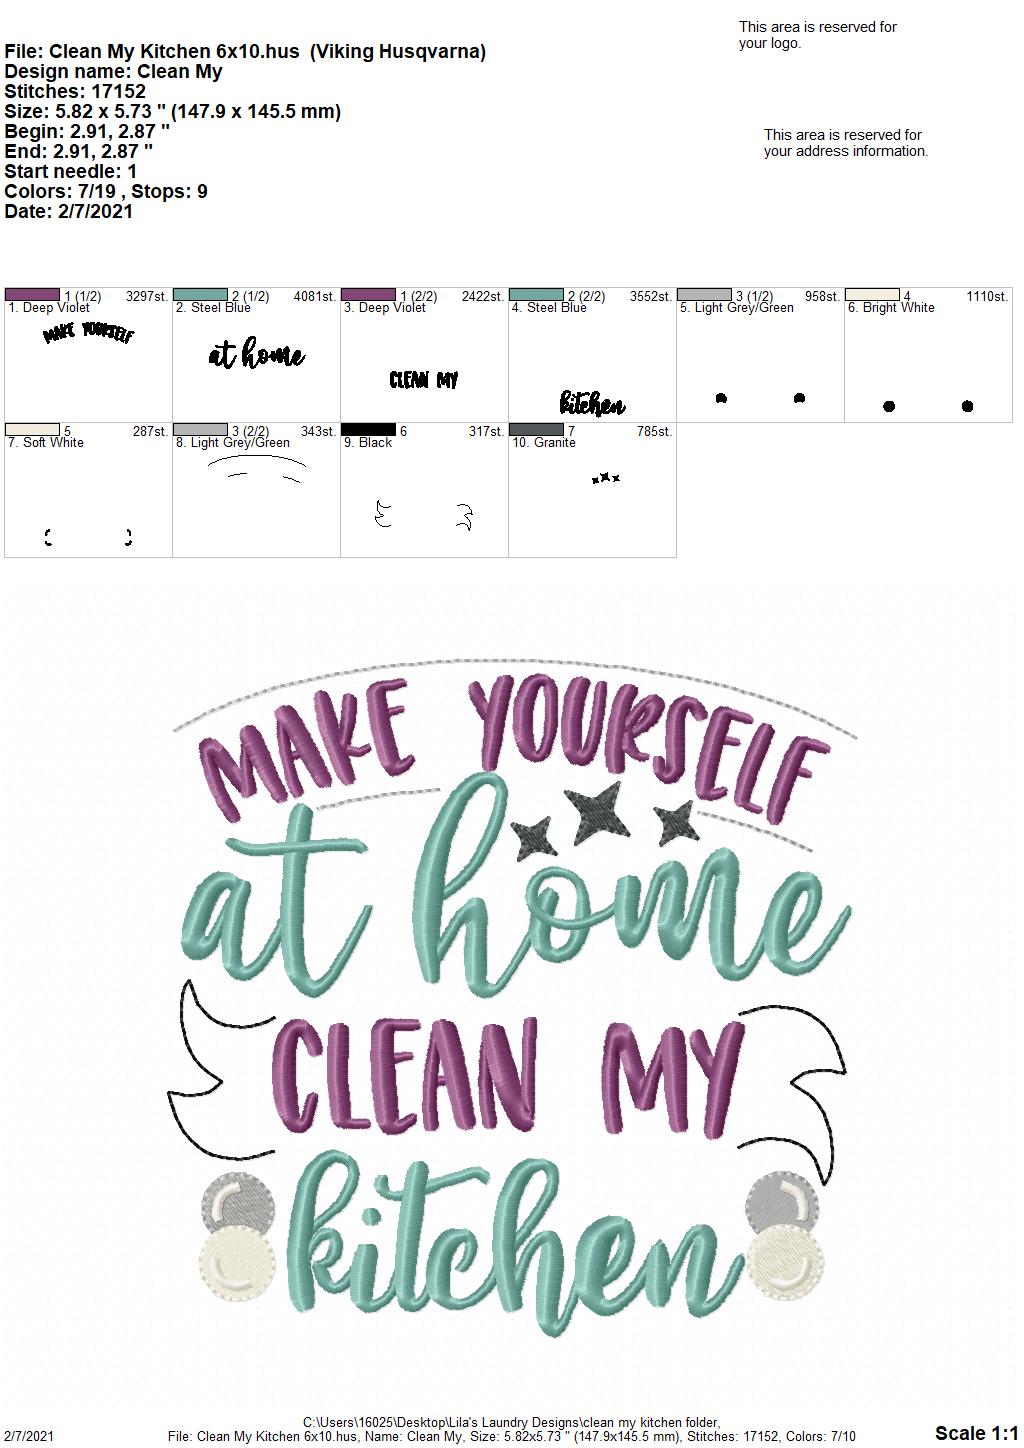 Clean My Kitchen - 3 sizes- Digital Embroidery Design